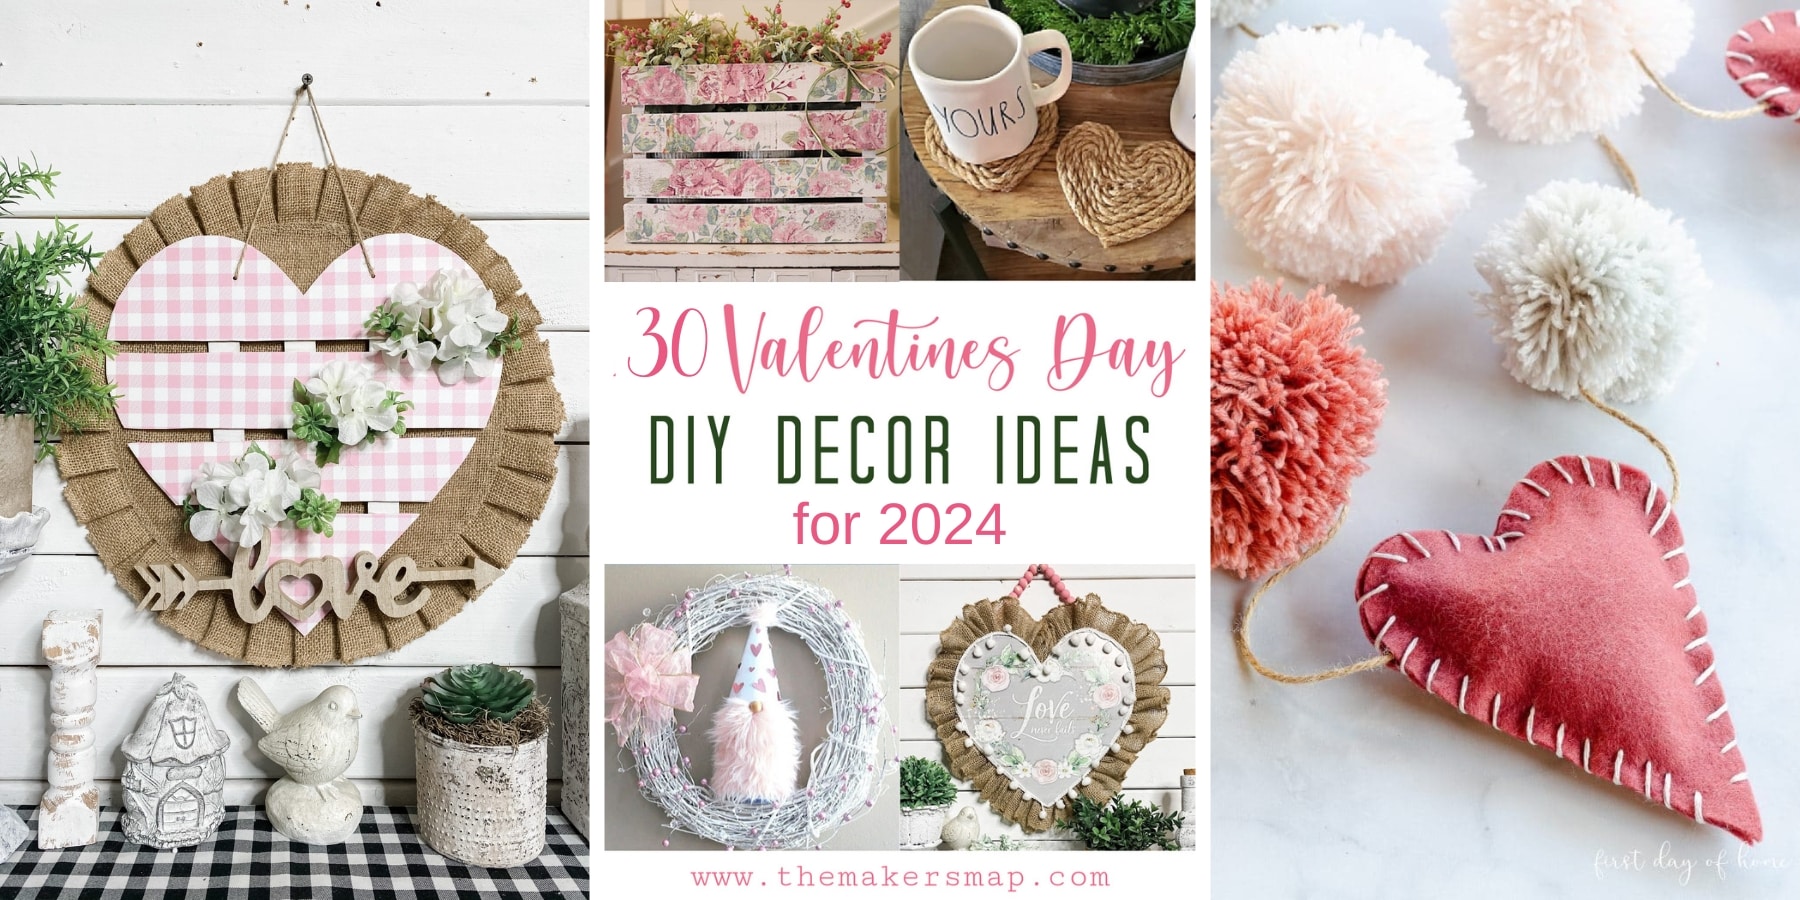 30 Valentine’s Day DIY Decor Ideas for 2024